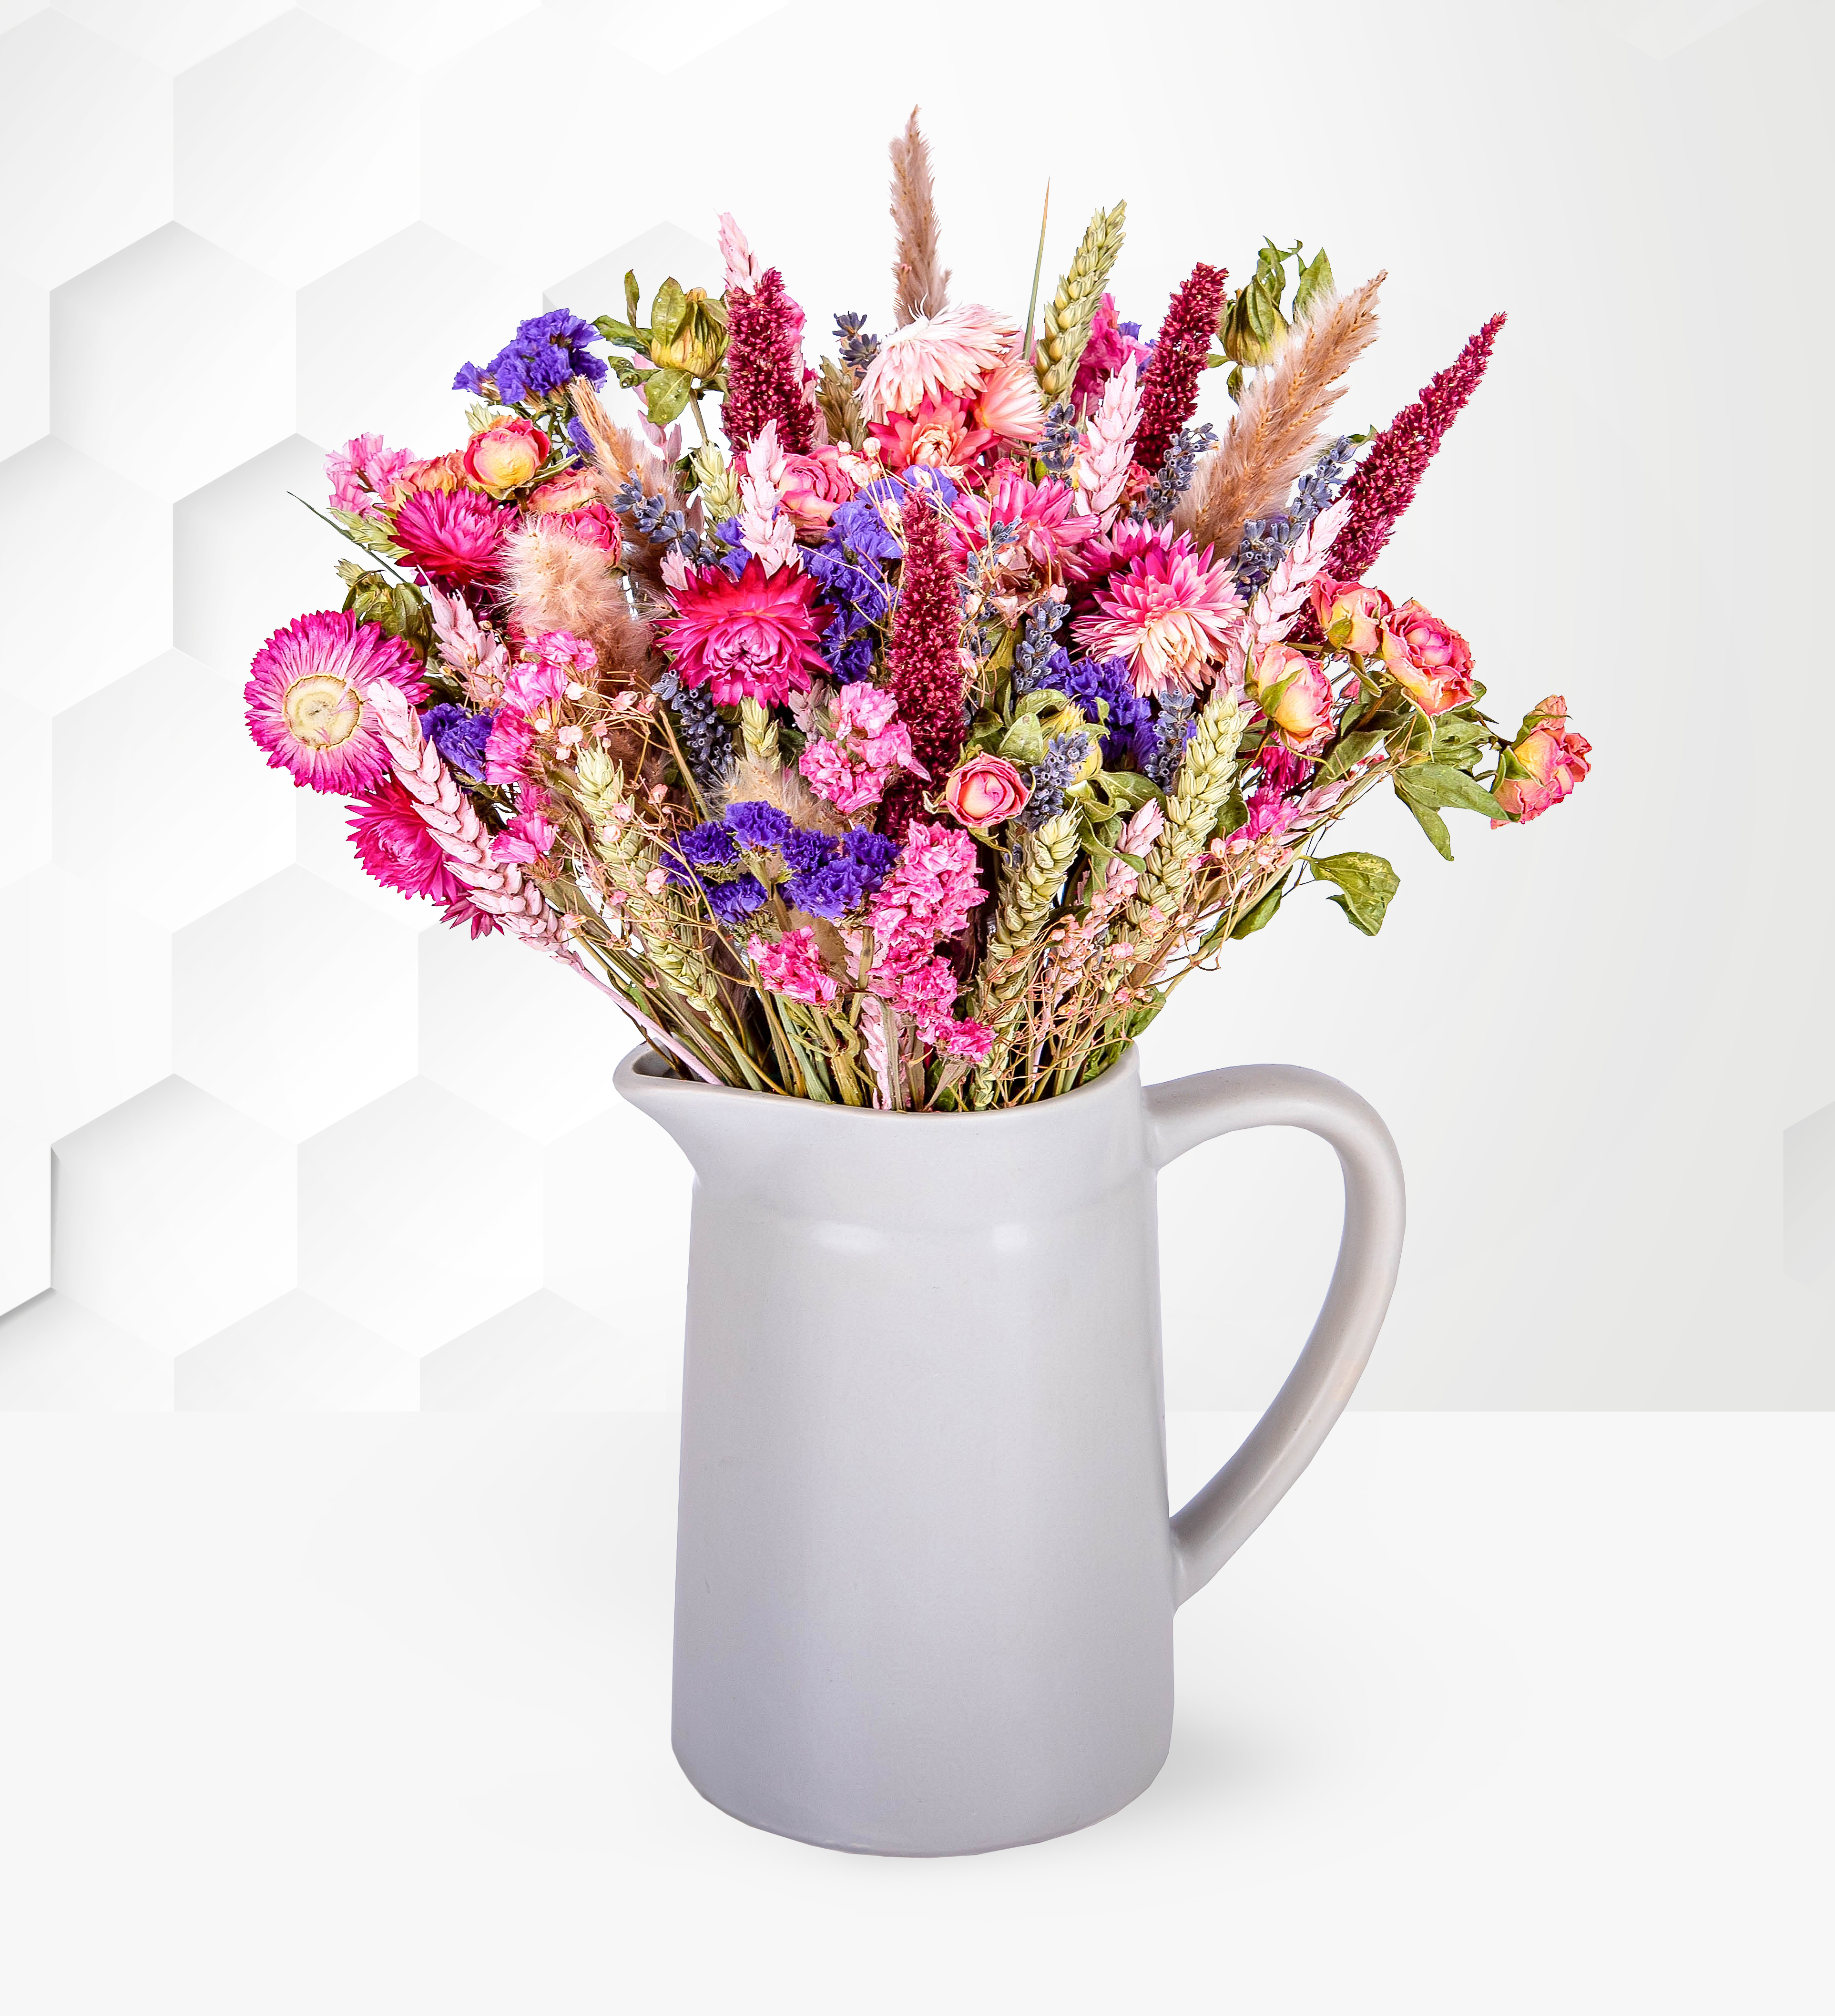 Pretty & Pink Dried Flowers - Dried Flowers - Dried Flower Bouquet - Dried Bouquet - Faux Flowers - Artificial Flowers